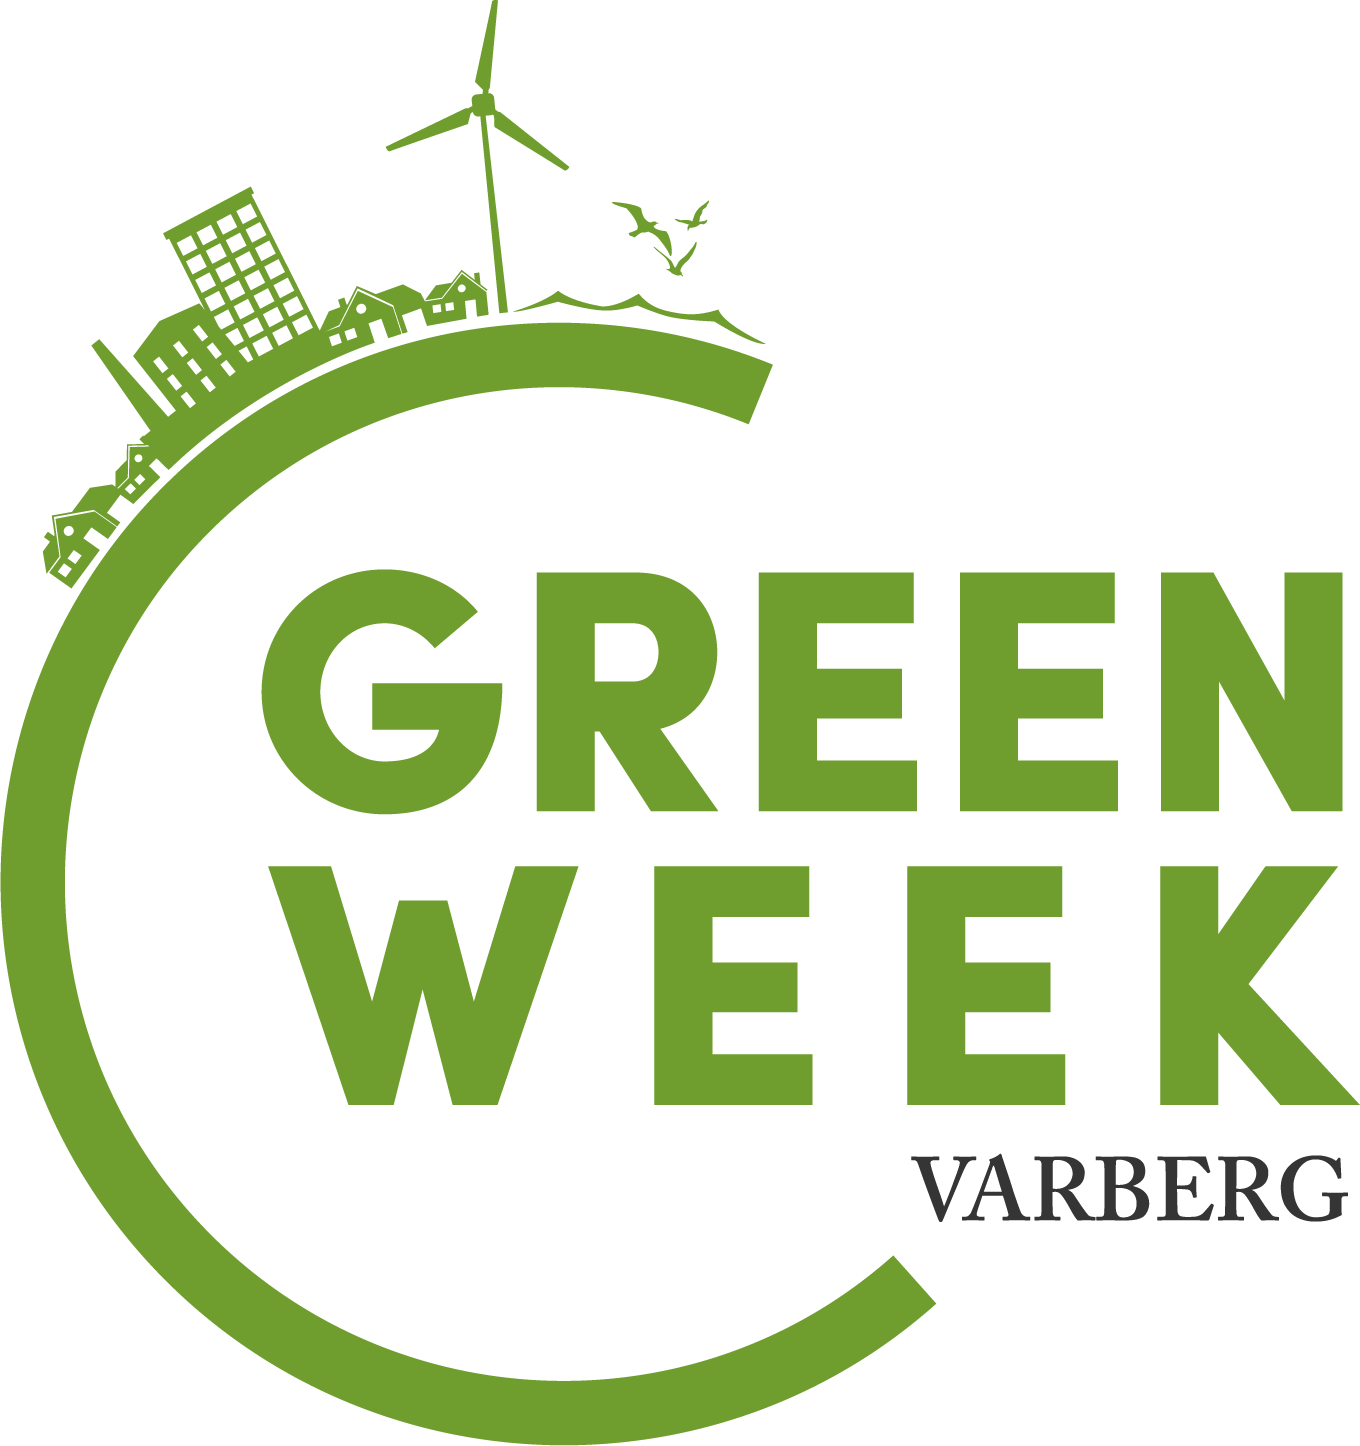 greenweek varberg cityscape green